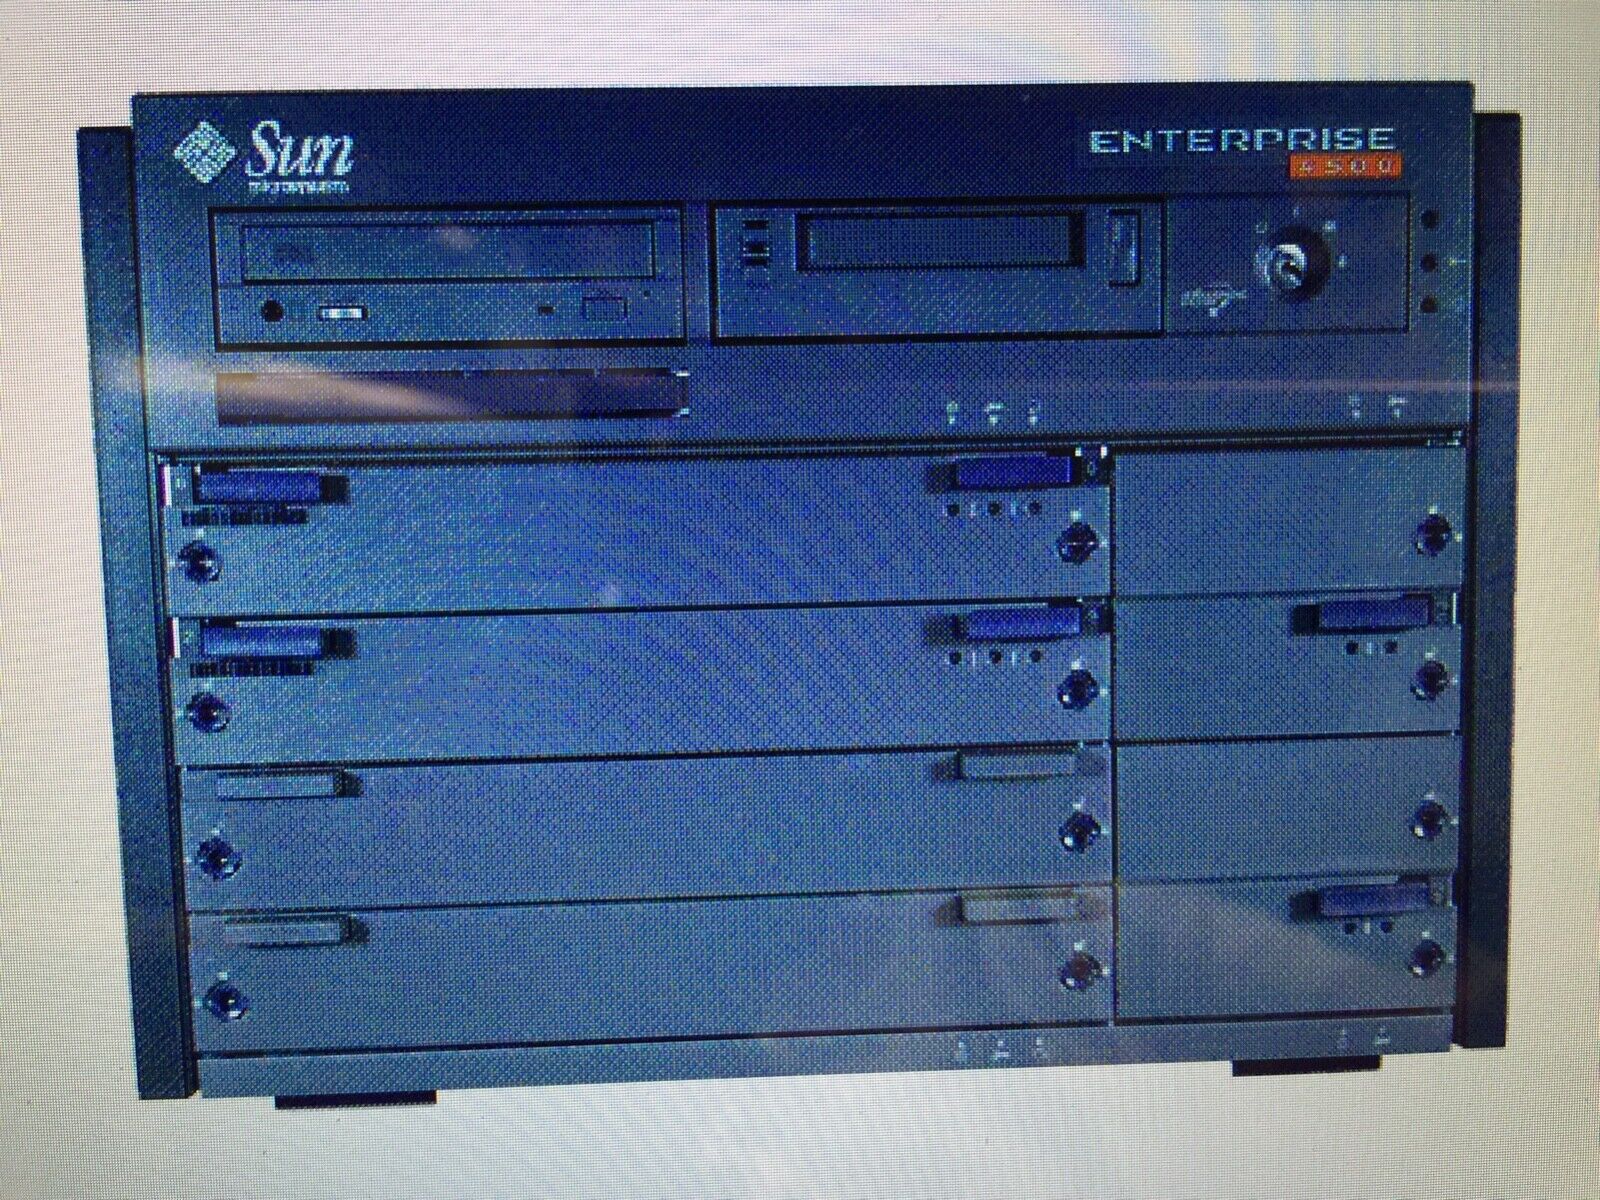 SUN Enterprise 4500 4x400Mhz,4gbRAM,2x18gbHDD,DVD,TgxGraphic, TEST-PASS